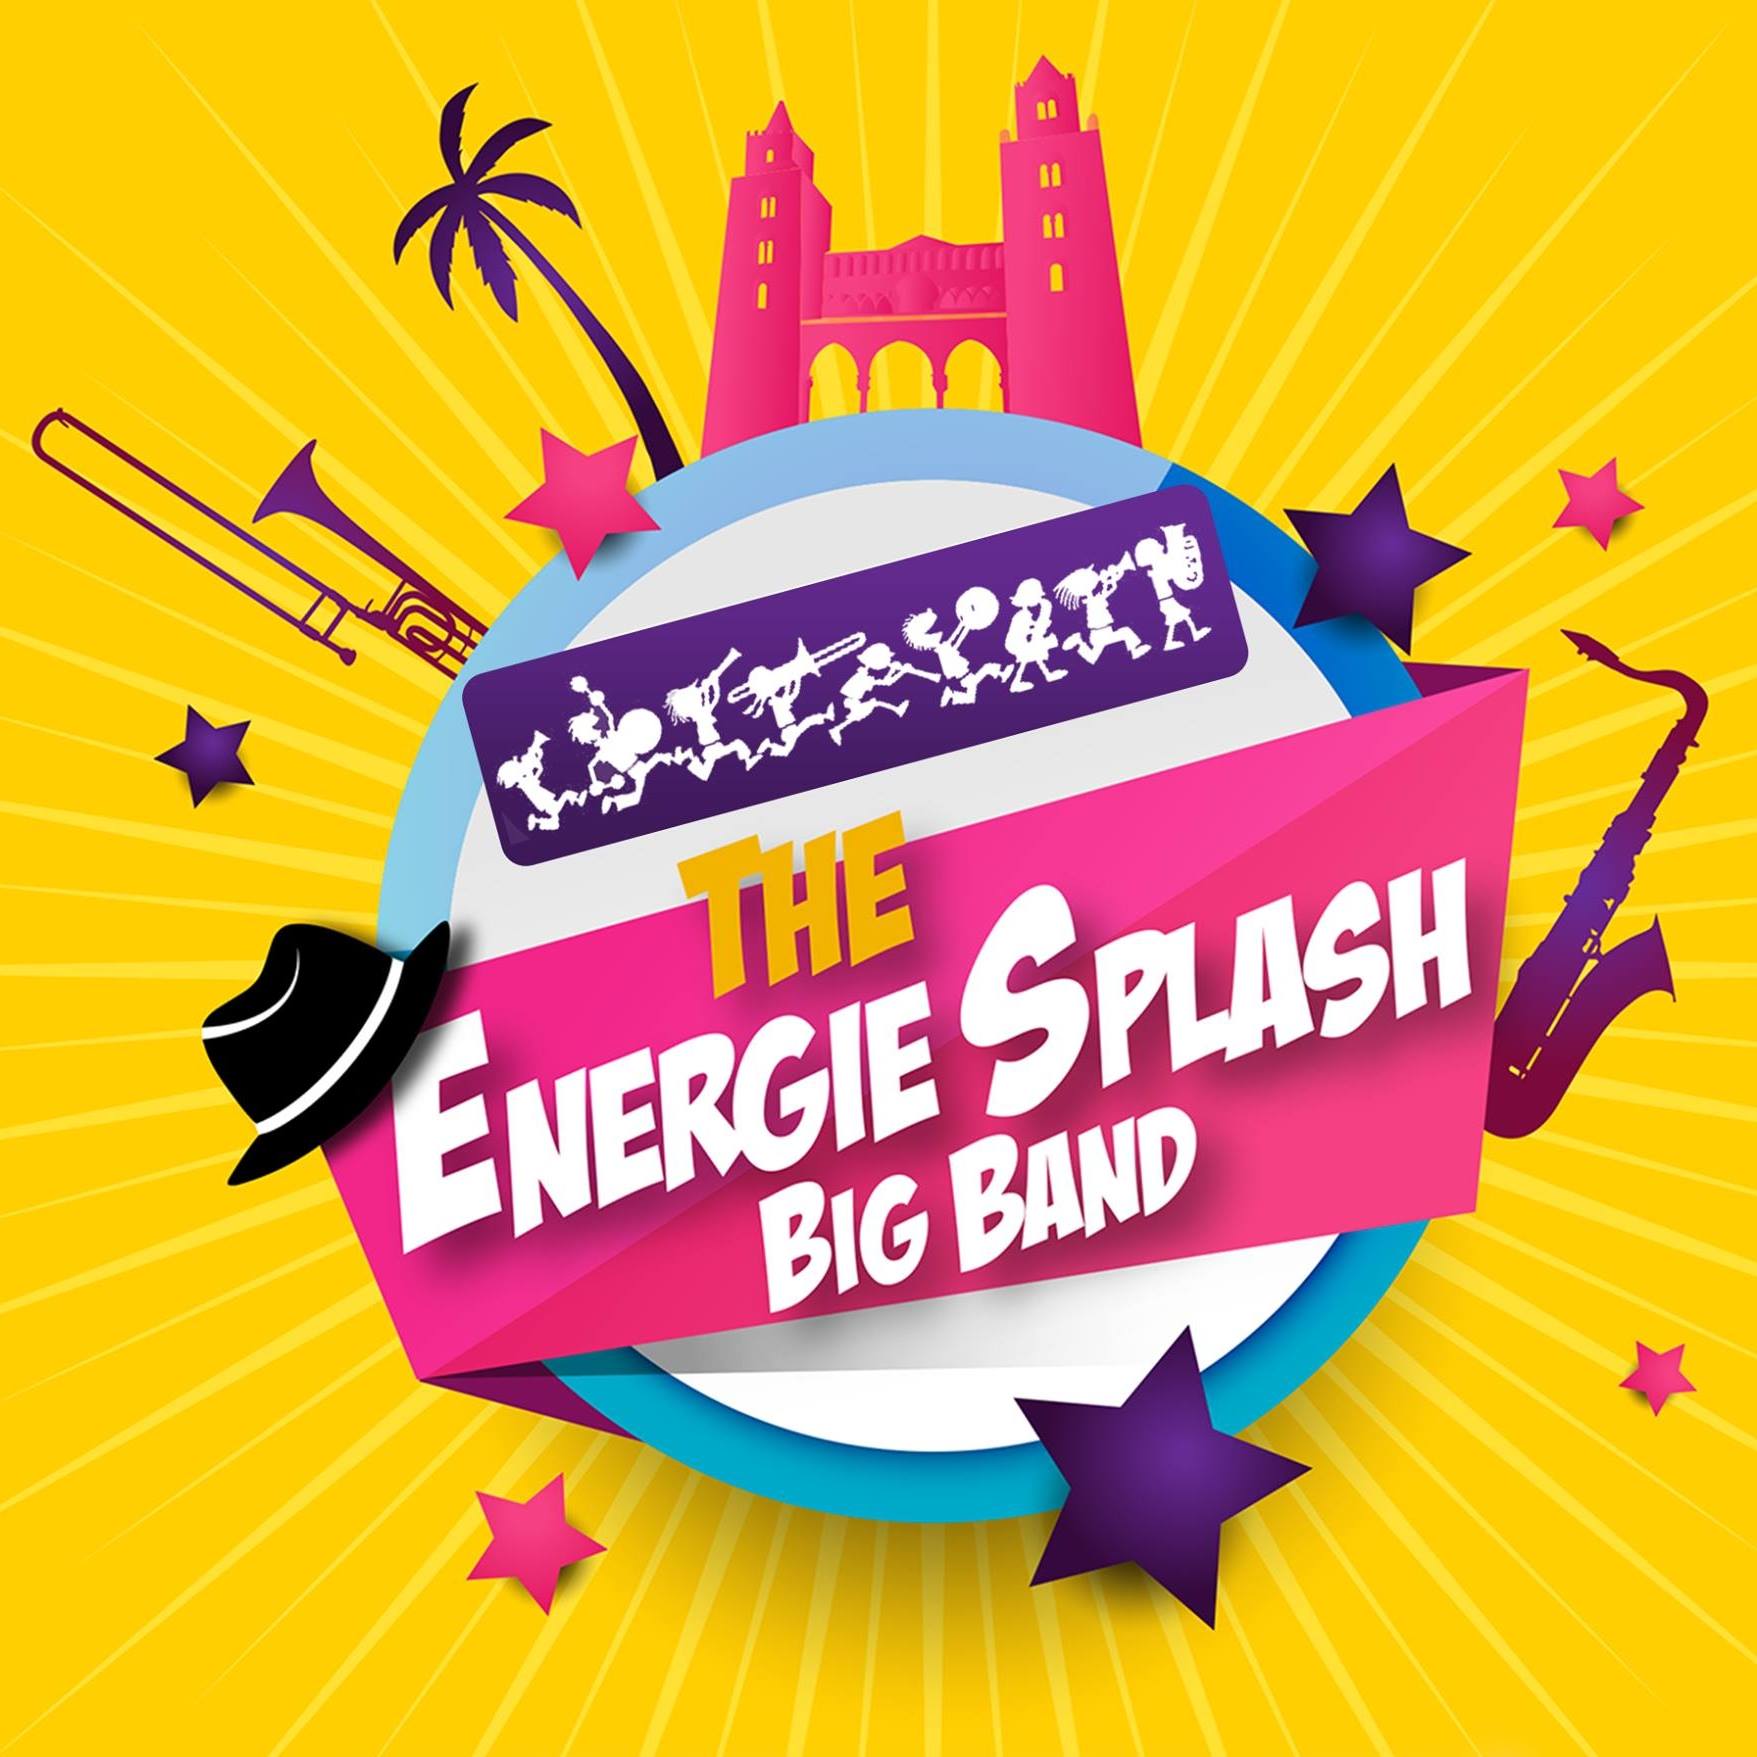 The Energie Splash big band